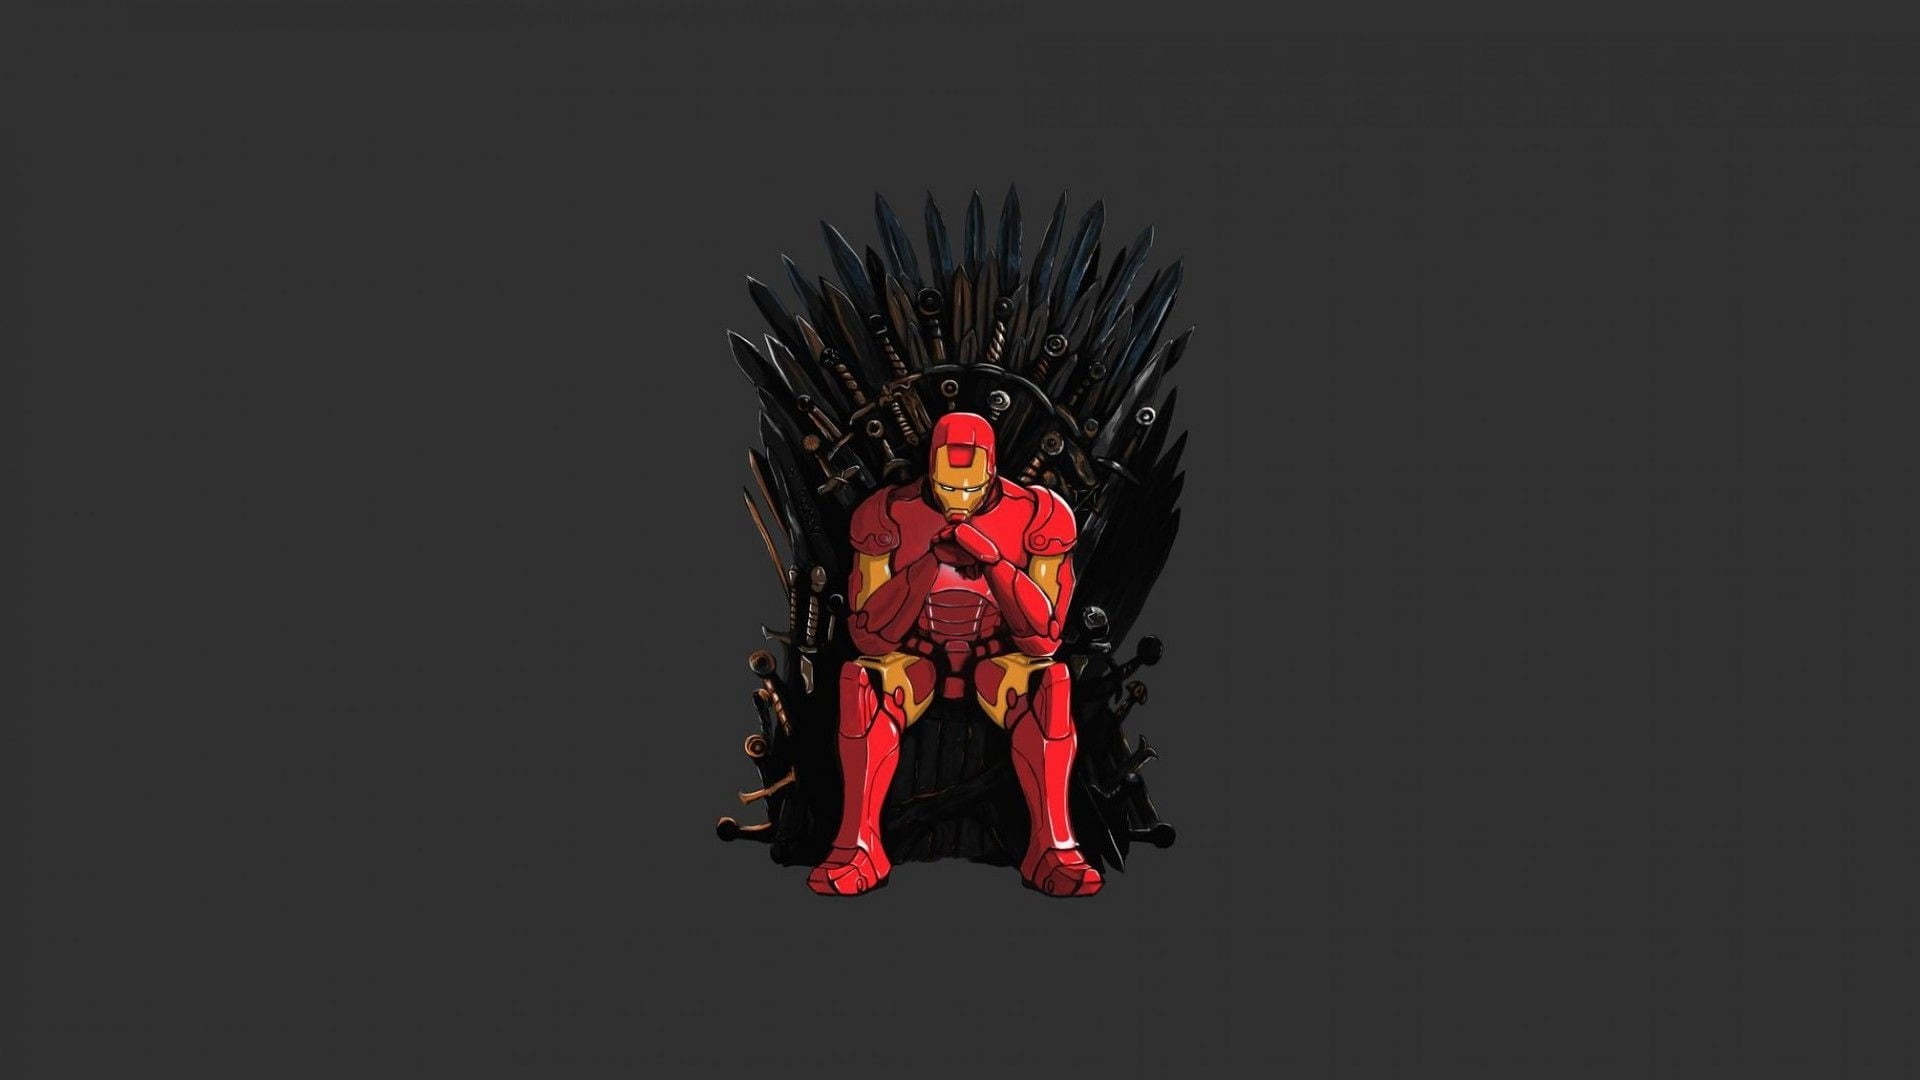 Marvel Iron Man wallpaper, Game of Thrones, Iron Throne, crossover